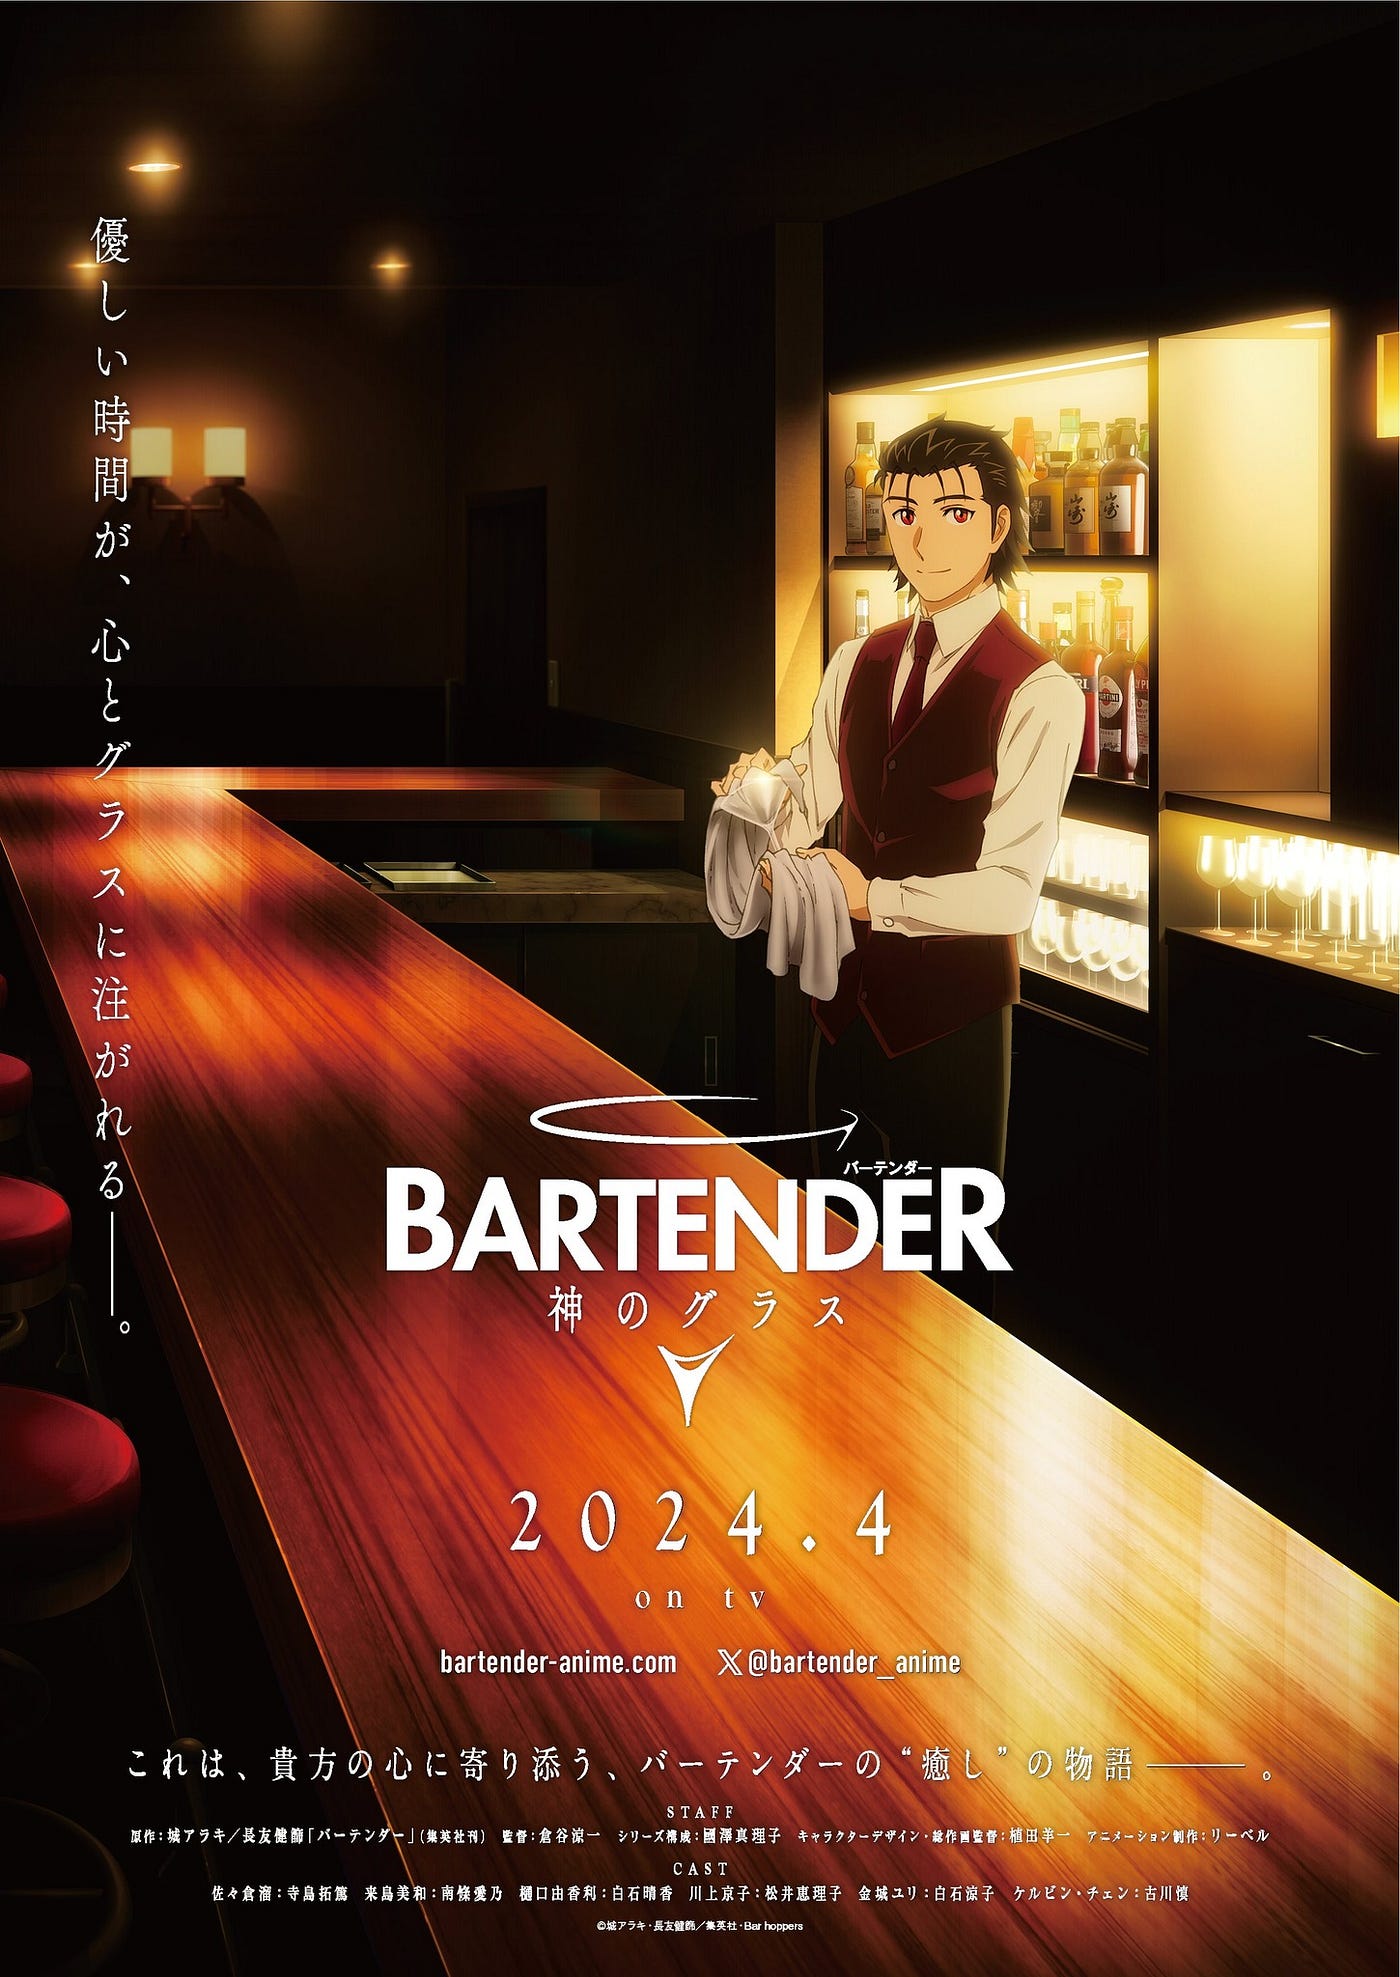 Bartender manga gets a new anime adaptation in 2024 | by Can Hoang Tran |  Medium